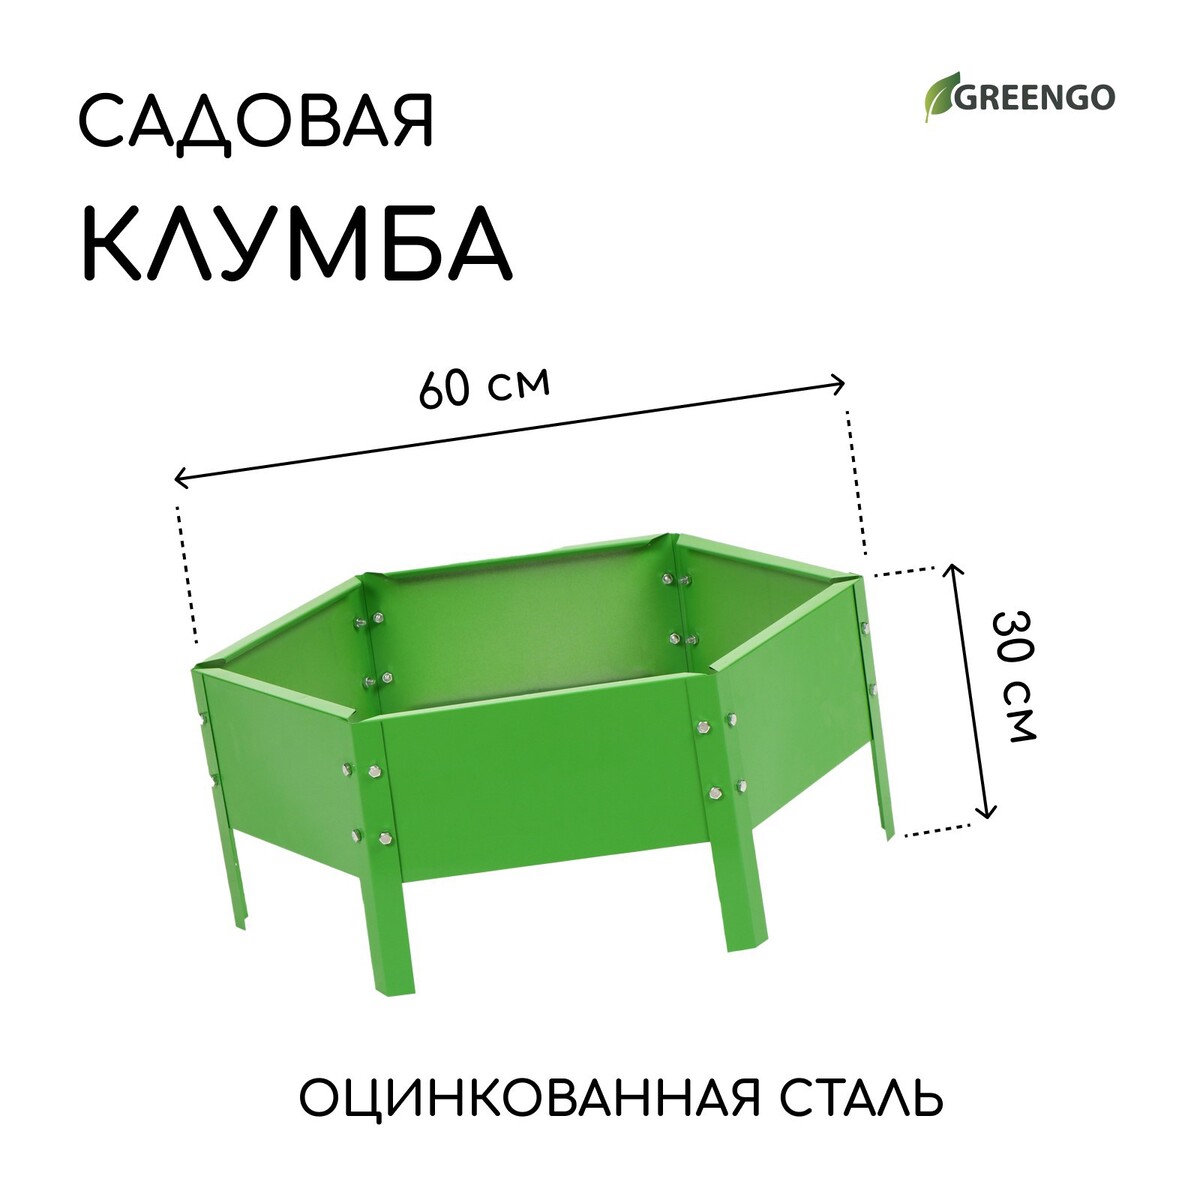 Клумба оцинкованная, d = 60 см, h = 15 см, ярко-зеленая, greengo клумба оцинкованная 50 × 50 × 15 см ярко зеленая greengo